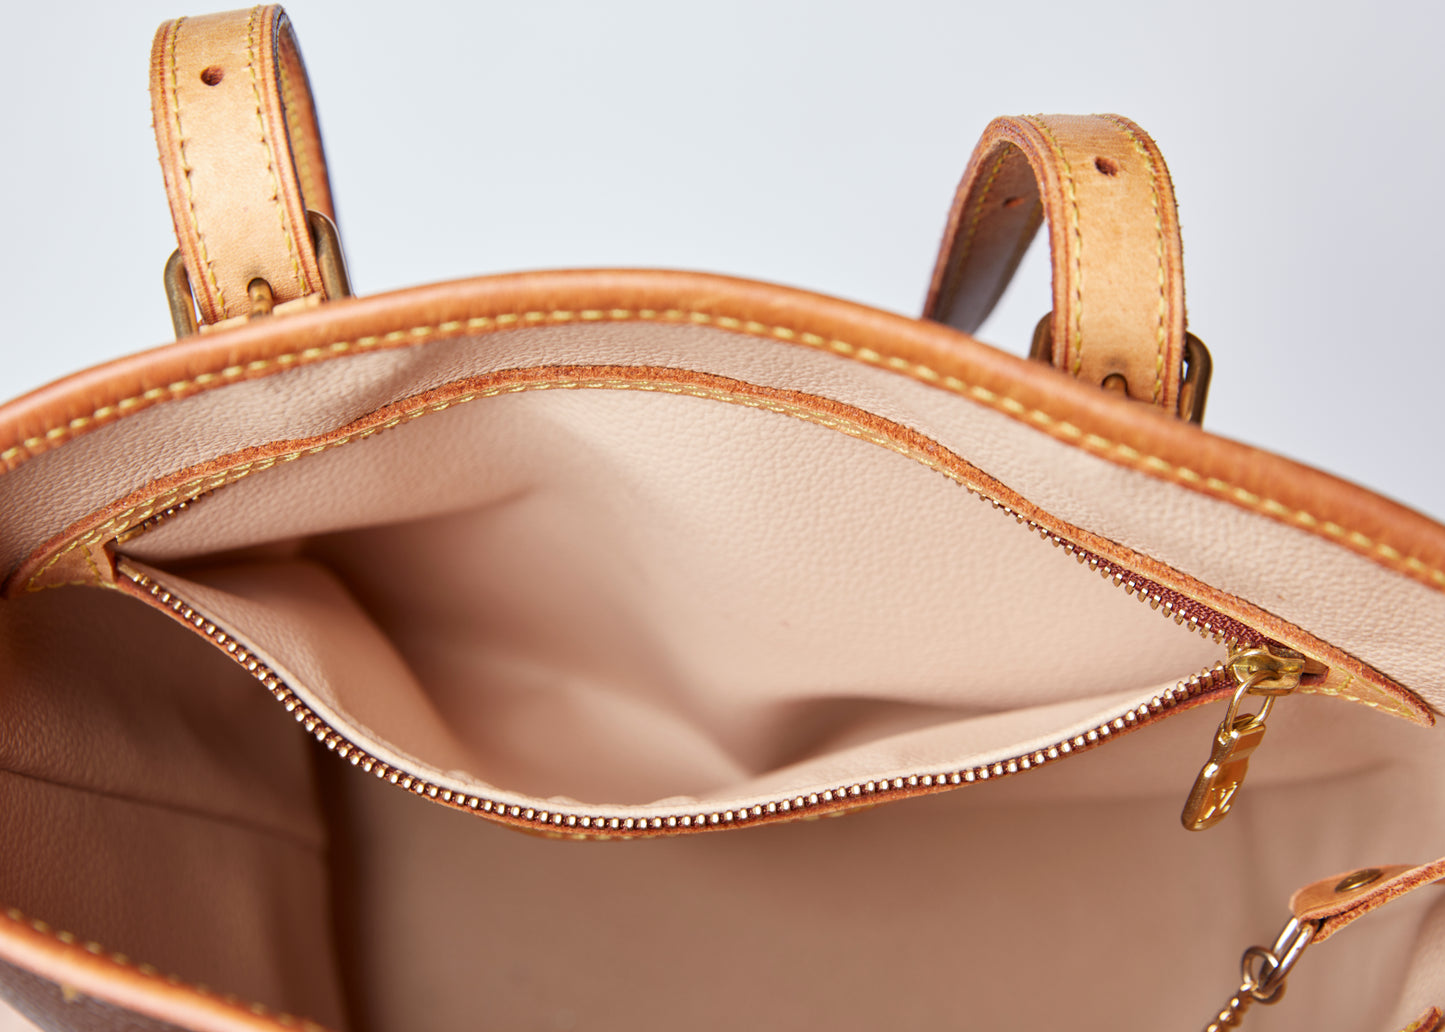 Louis Vuitton 80561 Bucket Bag – TasBatam168